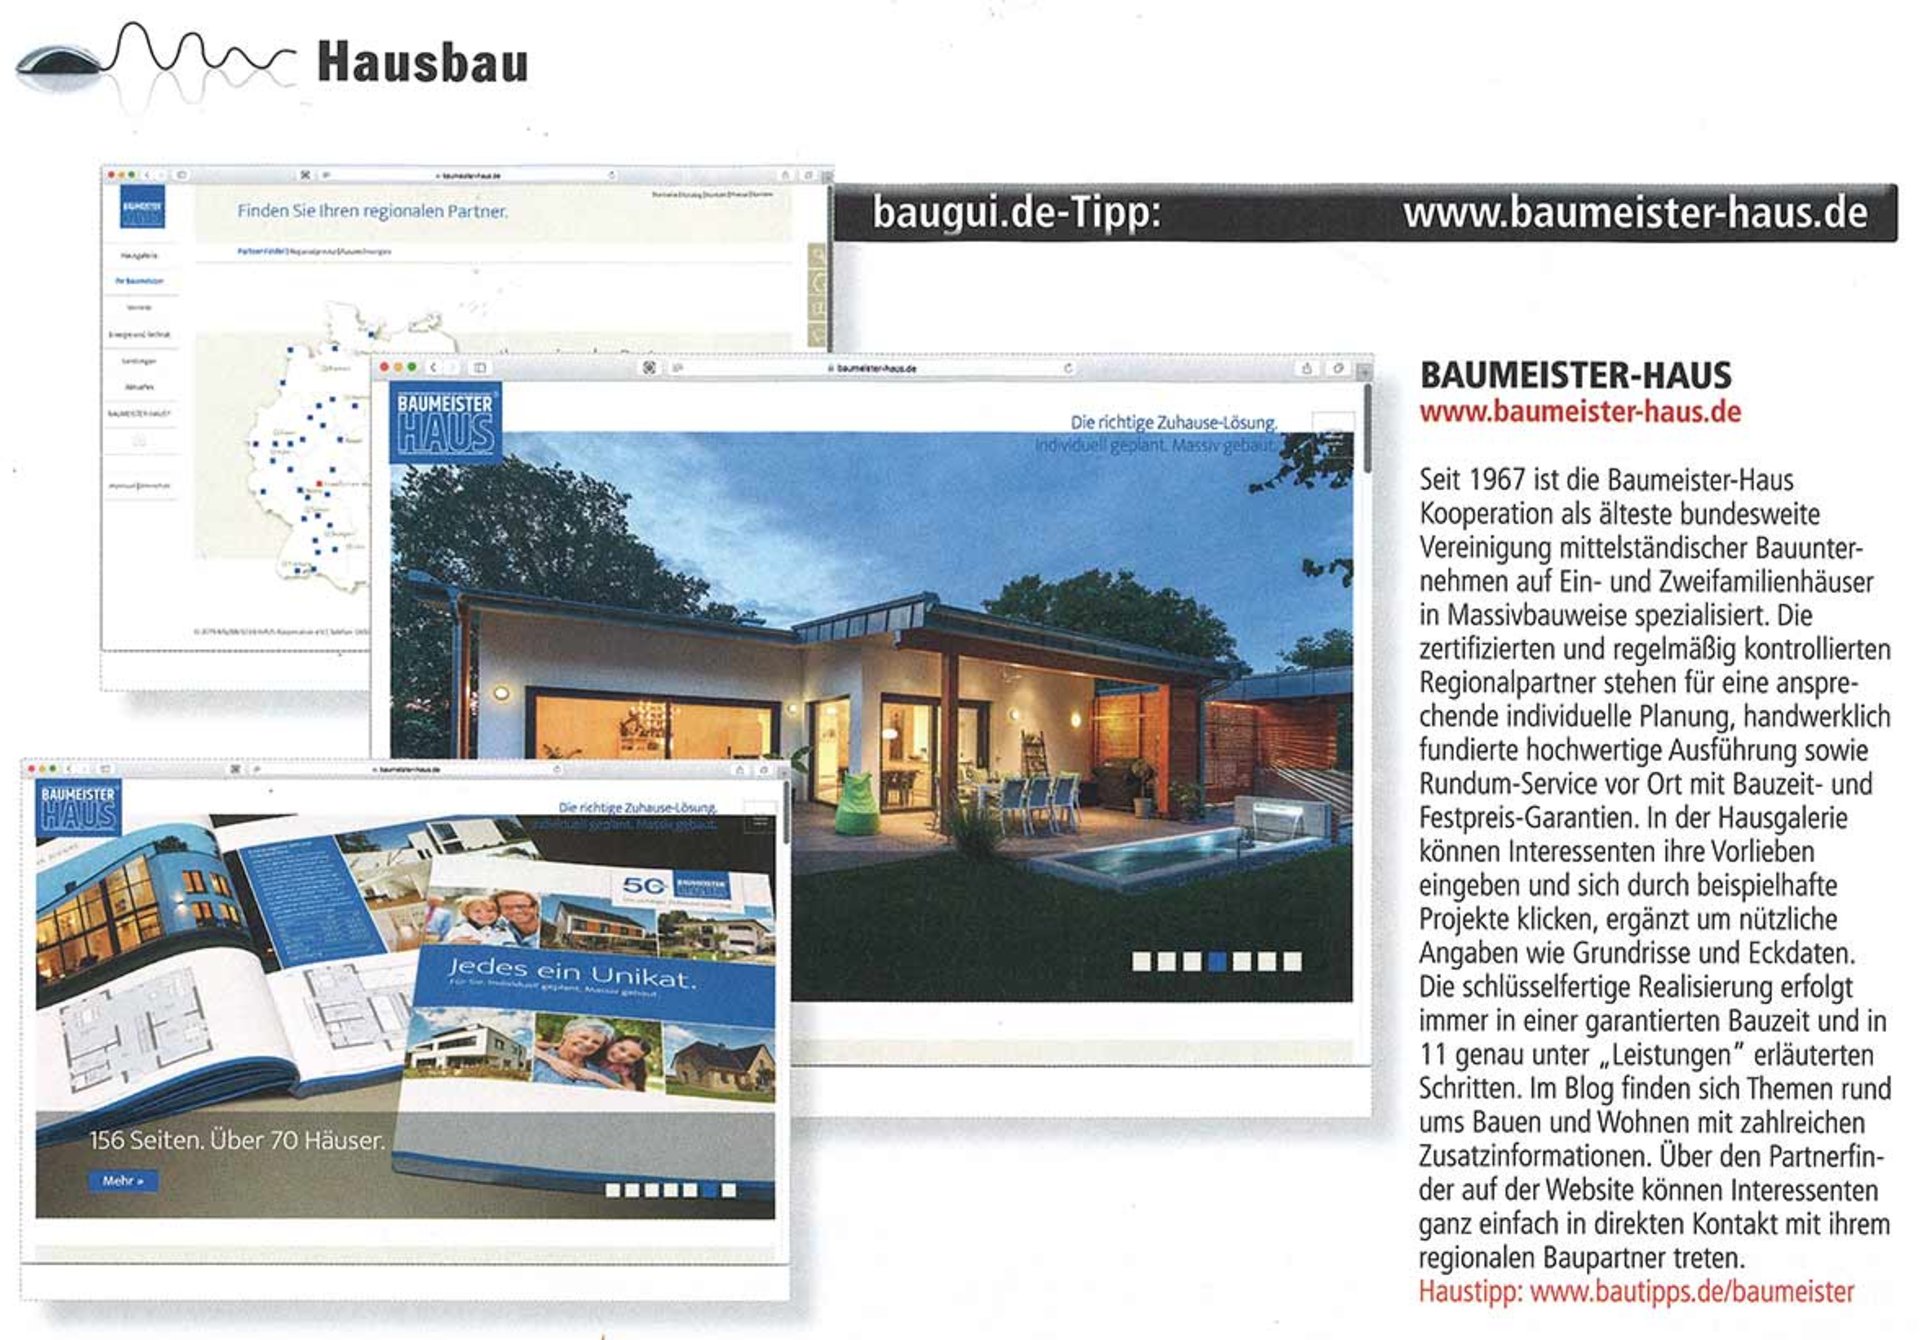 baugui.de-Tipp: www.baumeister-haus.de,  bauen., 10/11-2019 Artikel: BAUMEISTER-HAUS